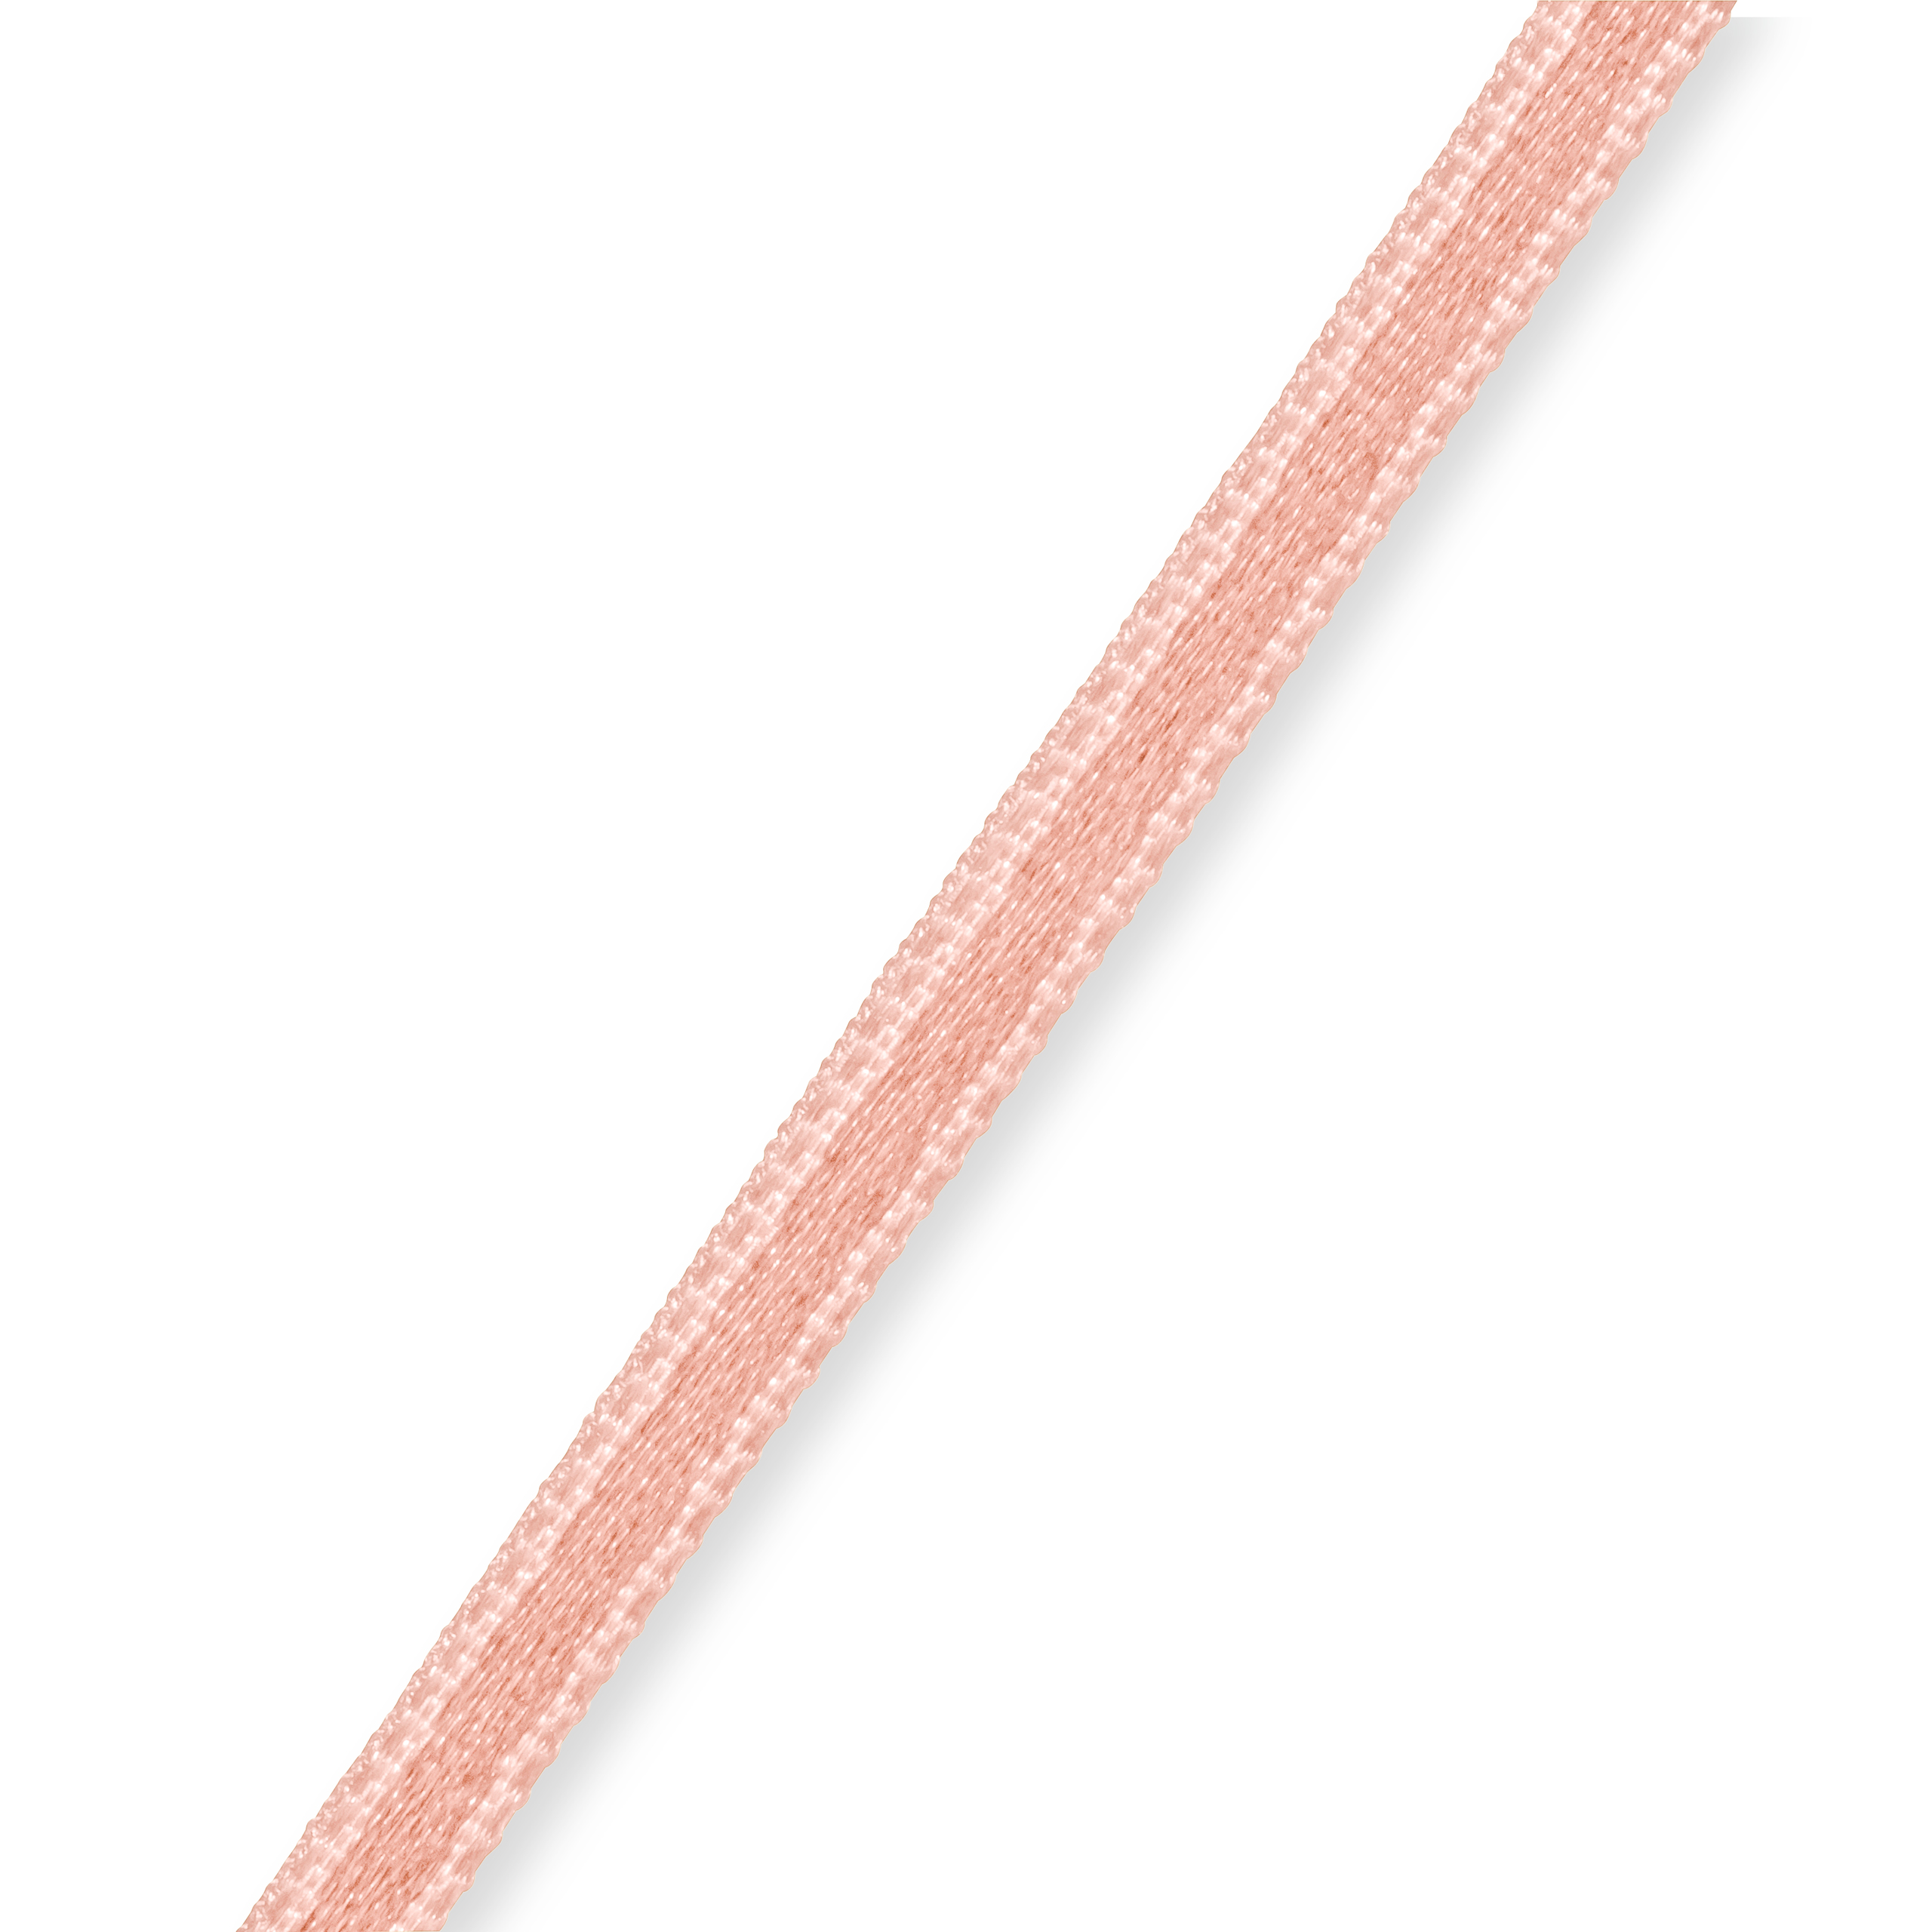 Satin ribbon 3 mm apricot, 50 m